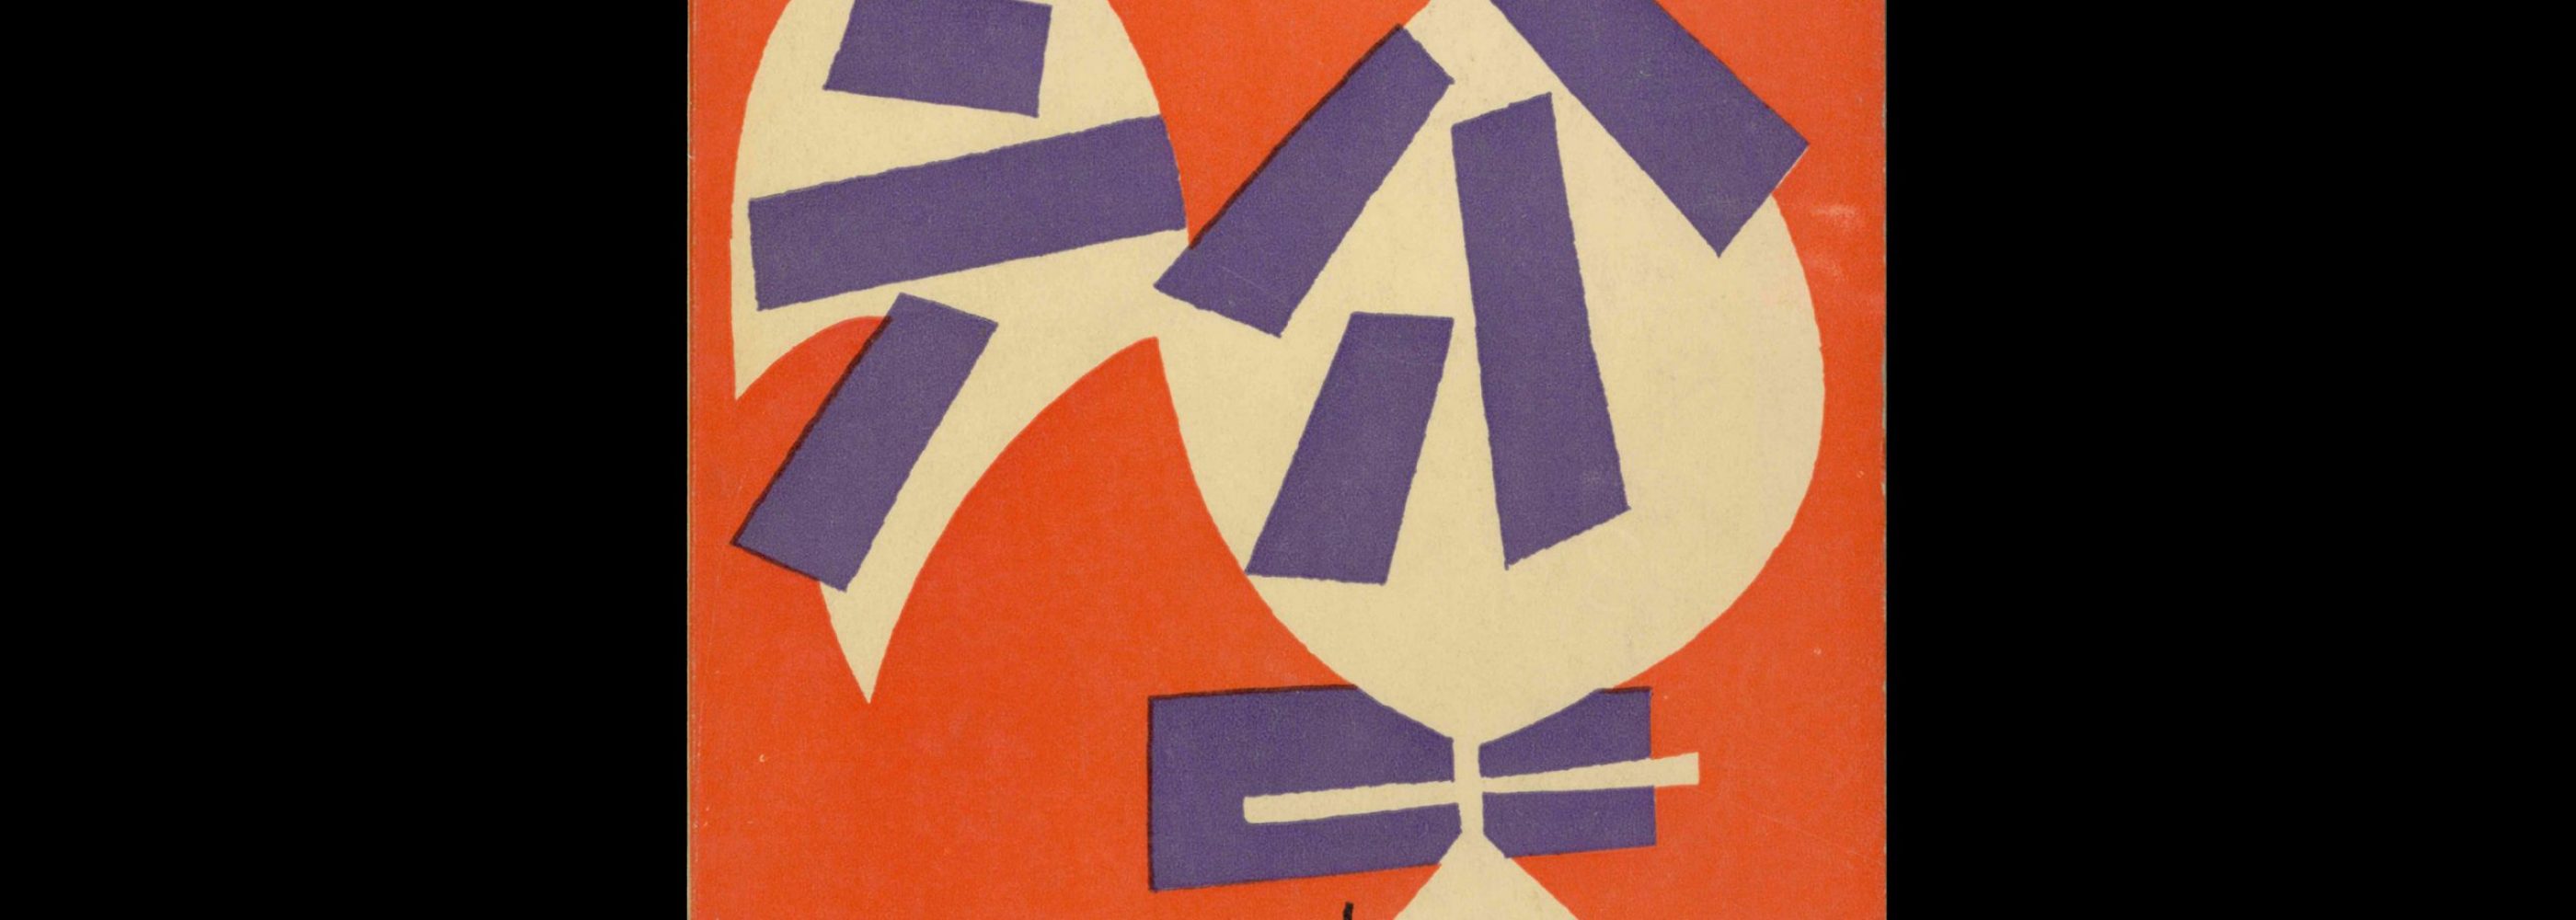 Perspektiven, Literatur, Kunst, Musik, 3, 1953. Cover design by Paul Rand